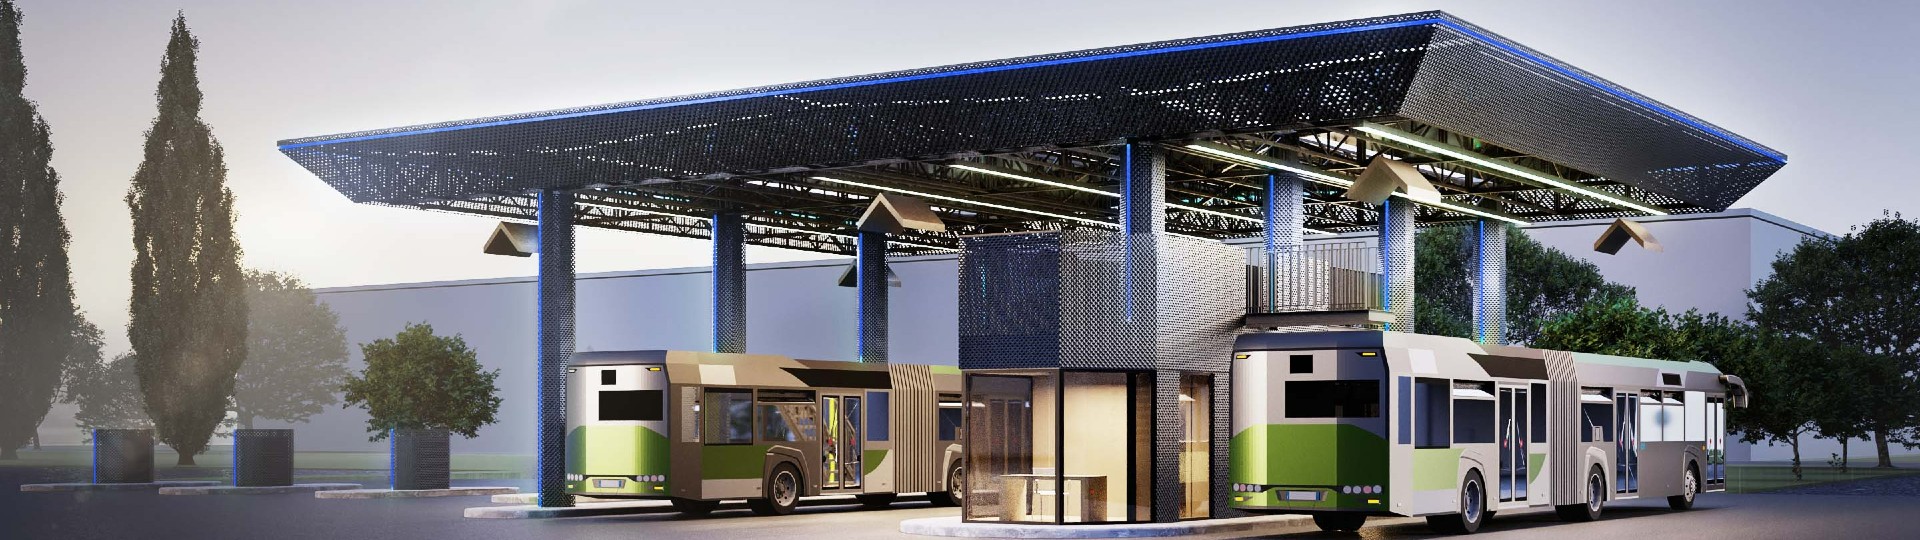 Solaris Charging Park – innovativer Ladepark für Elektrofahrzeuge